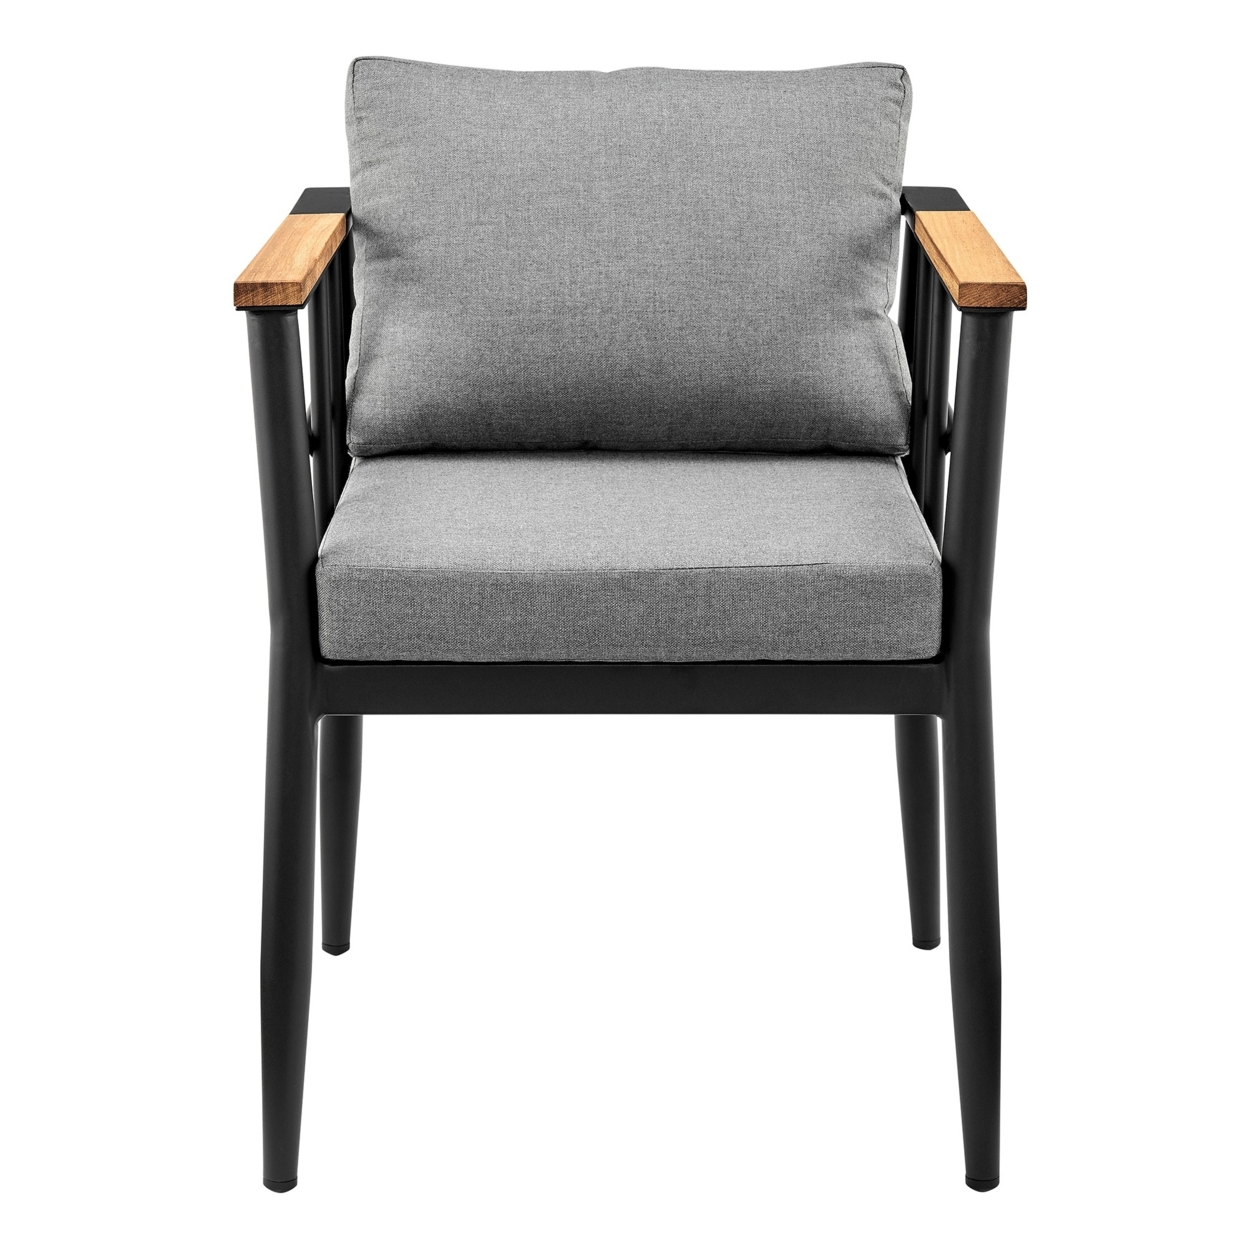 Zoe 24 Inch Patio Dining Chair, Set Of 2, Aluminum Frame, Gray And Black- Saltoro Sherpi